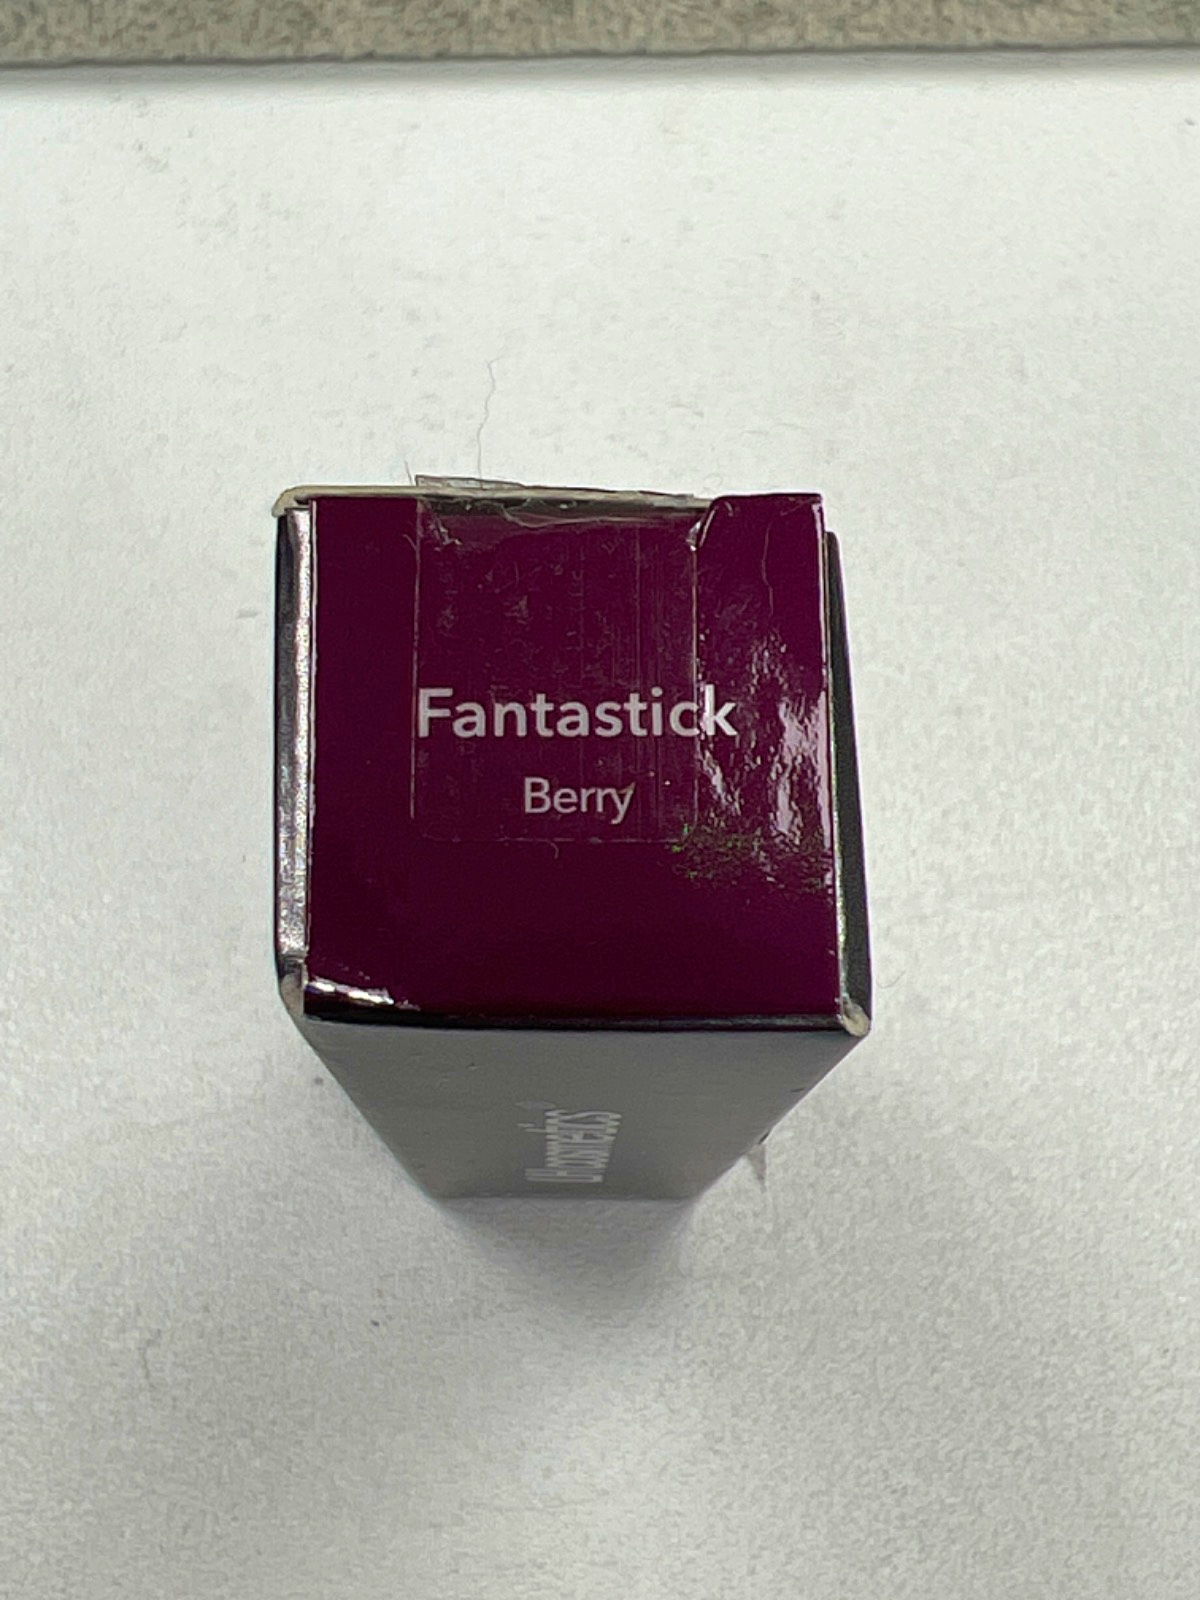 LH cosmetics Fantastick Berry 3.5g